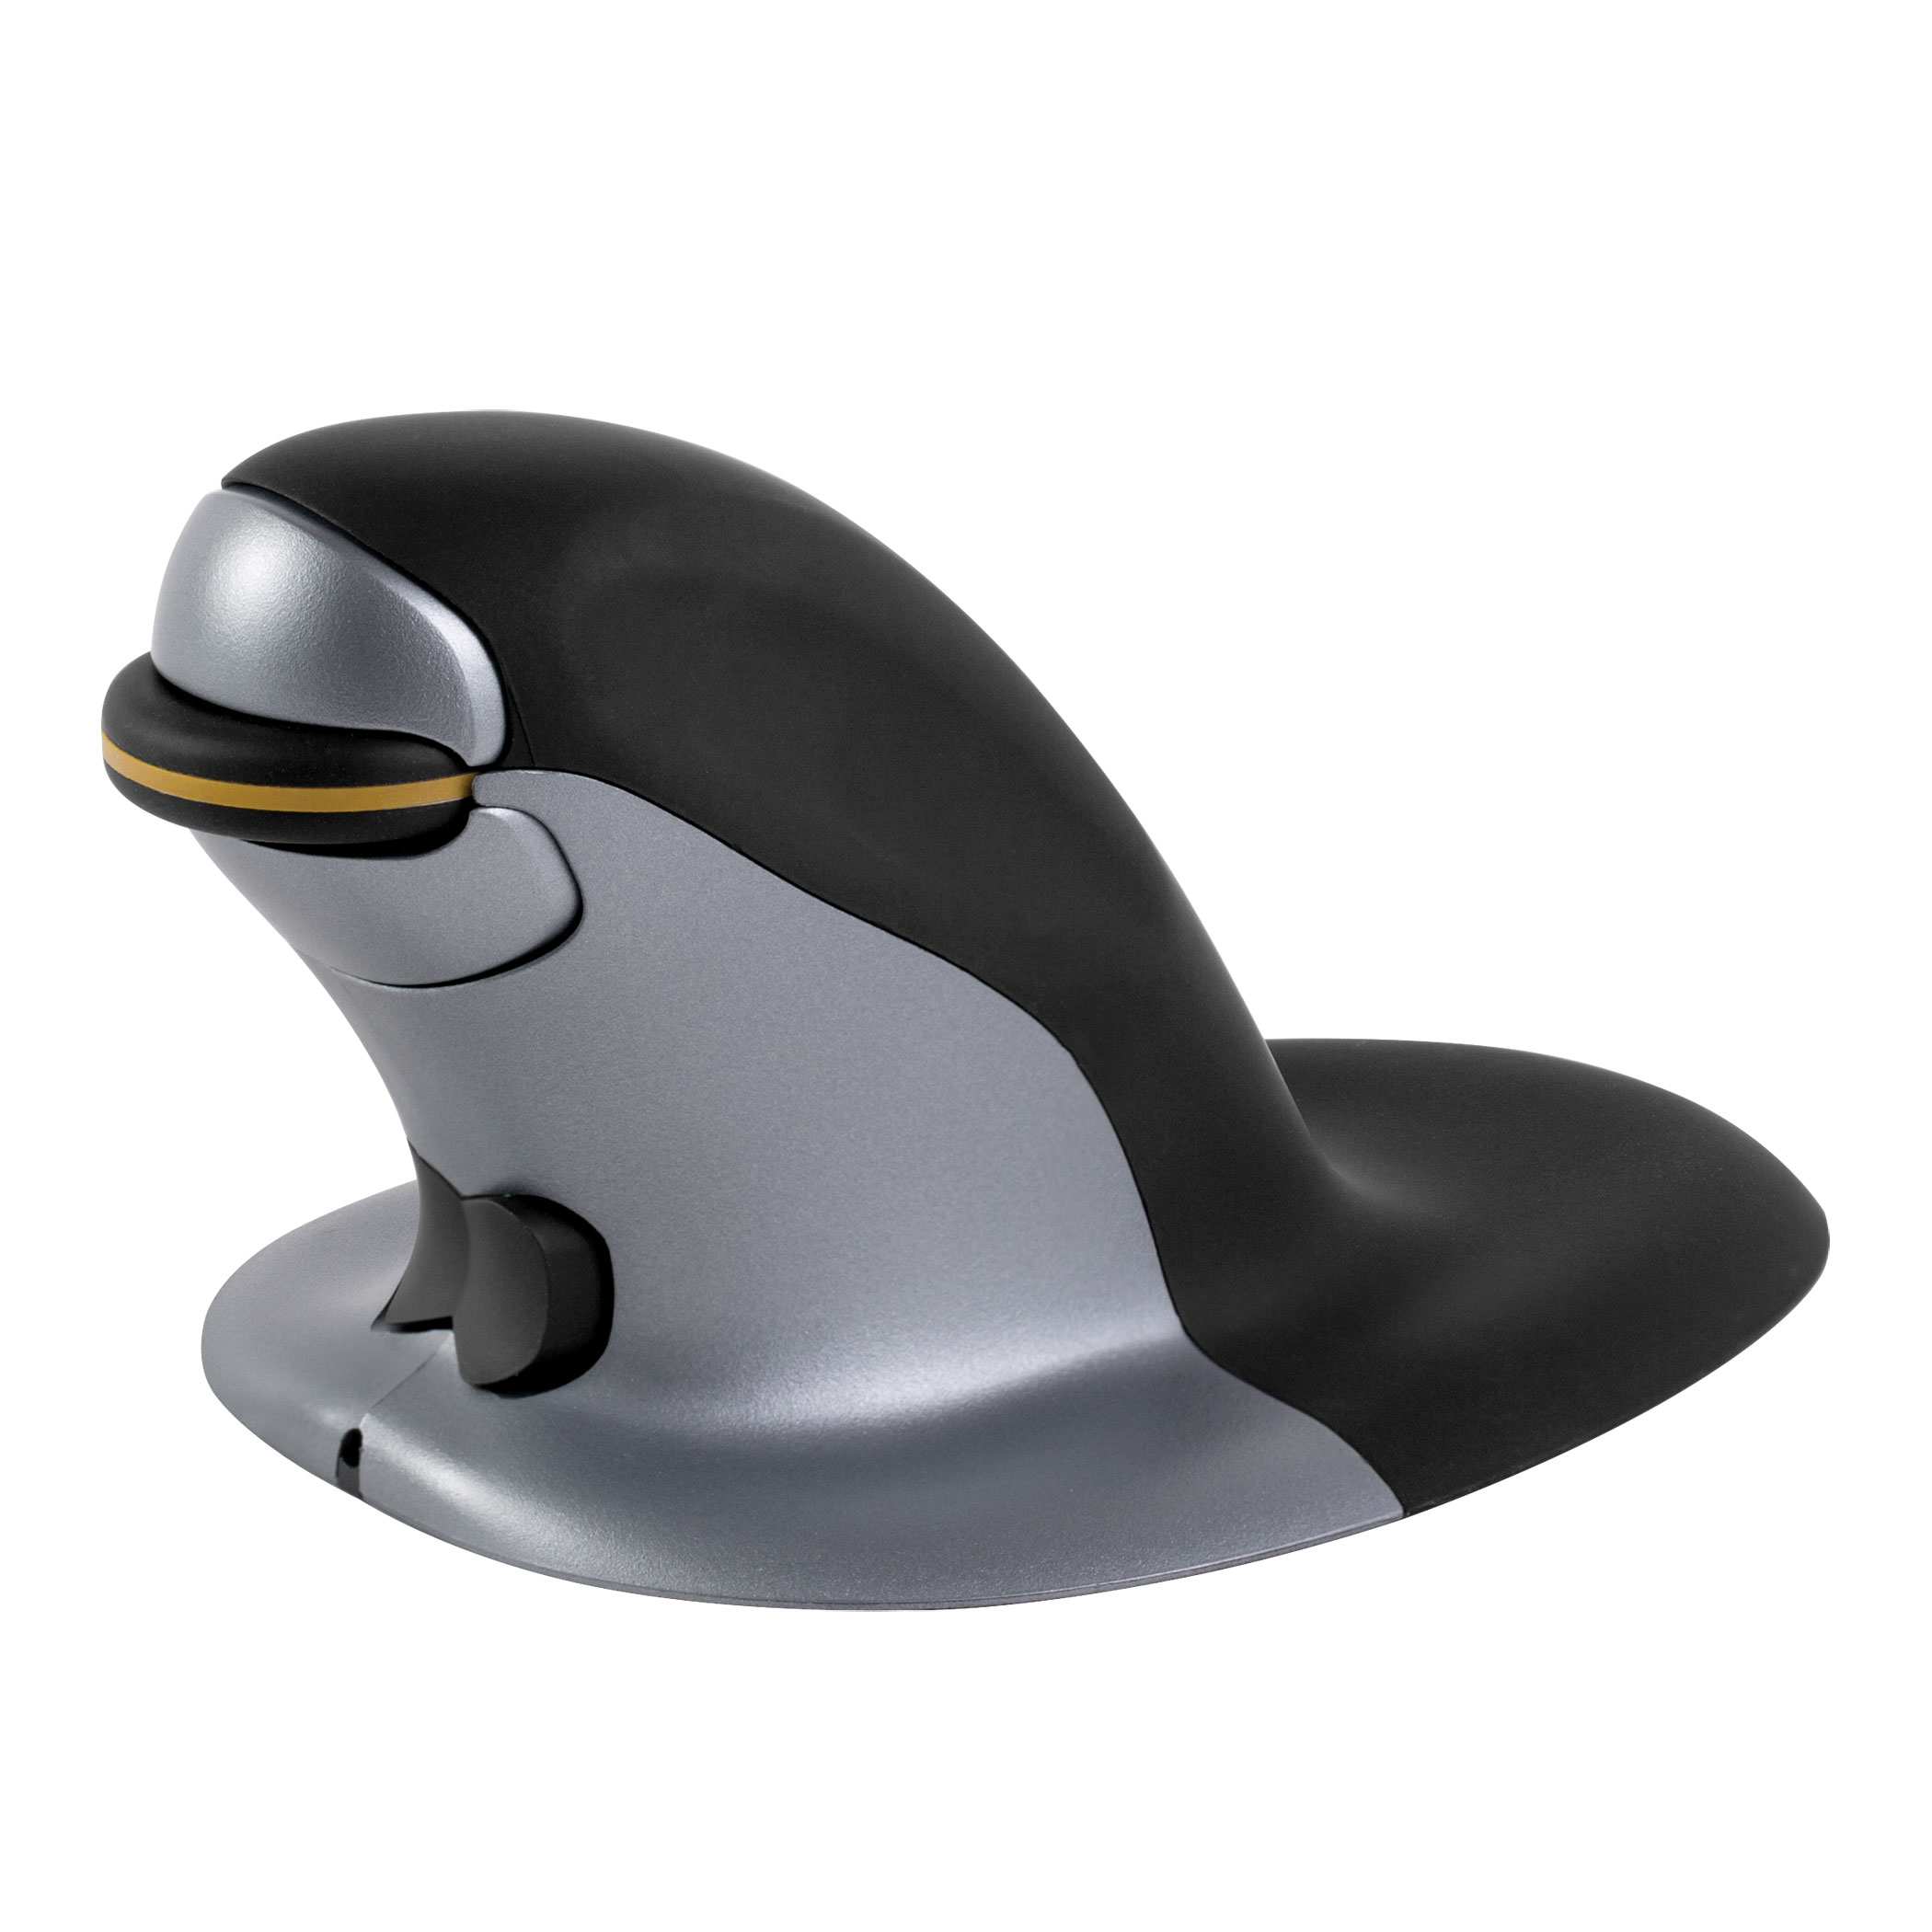 Беспроводная вертикальная мышь FELLOWES Penguin FS-98945 Black/Silver